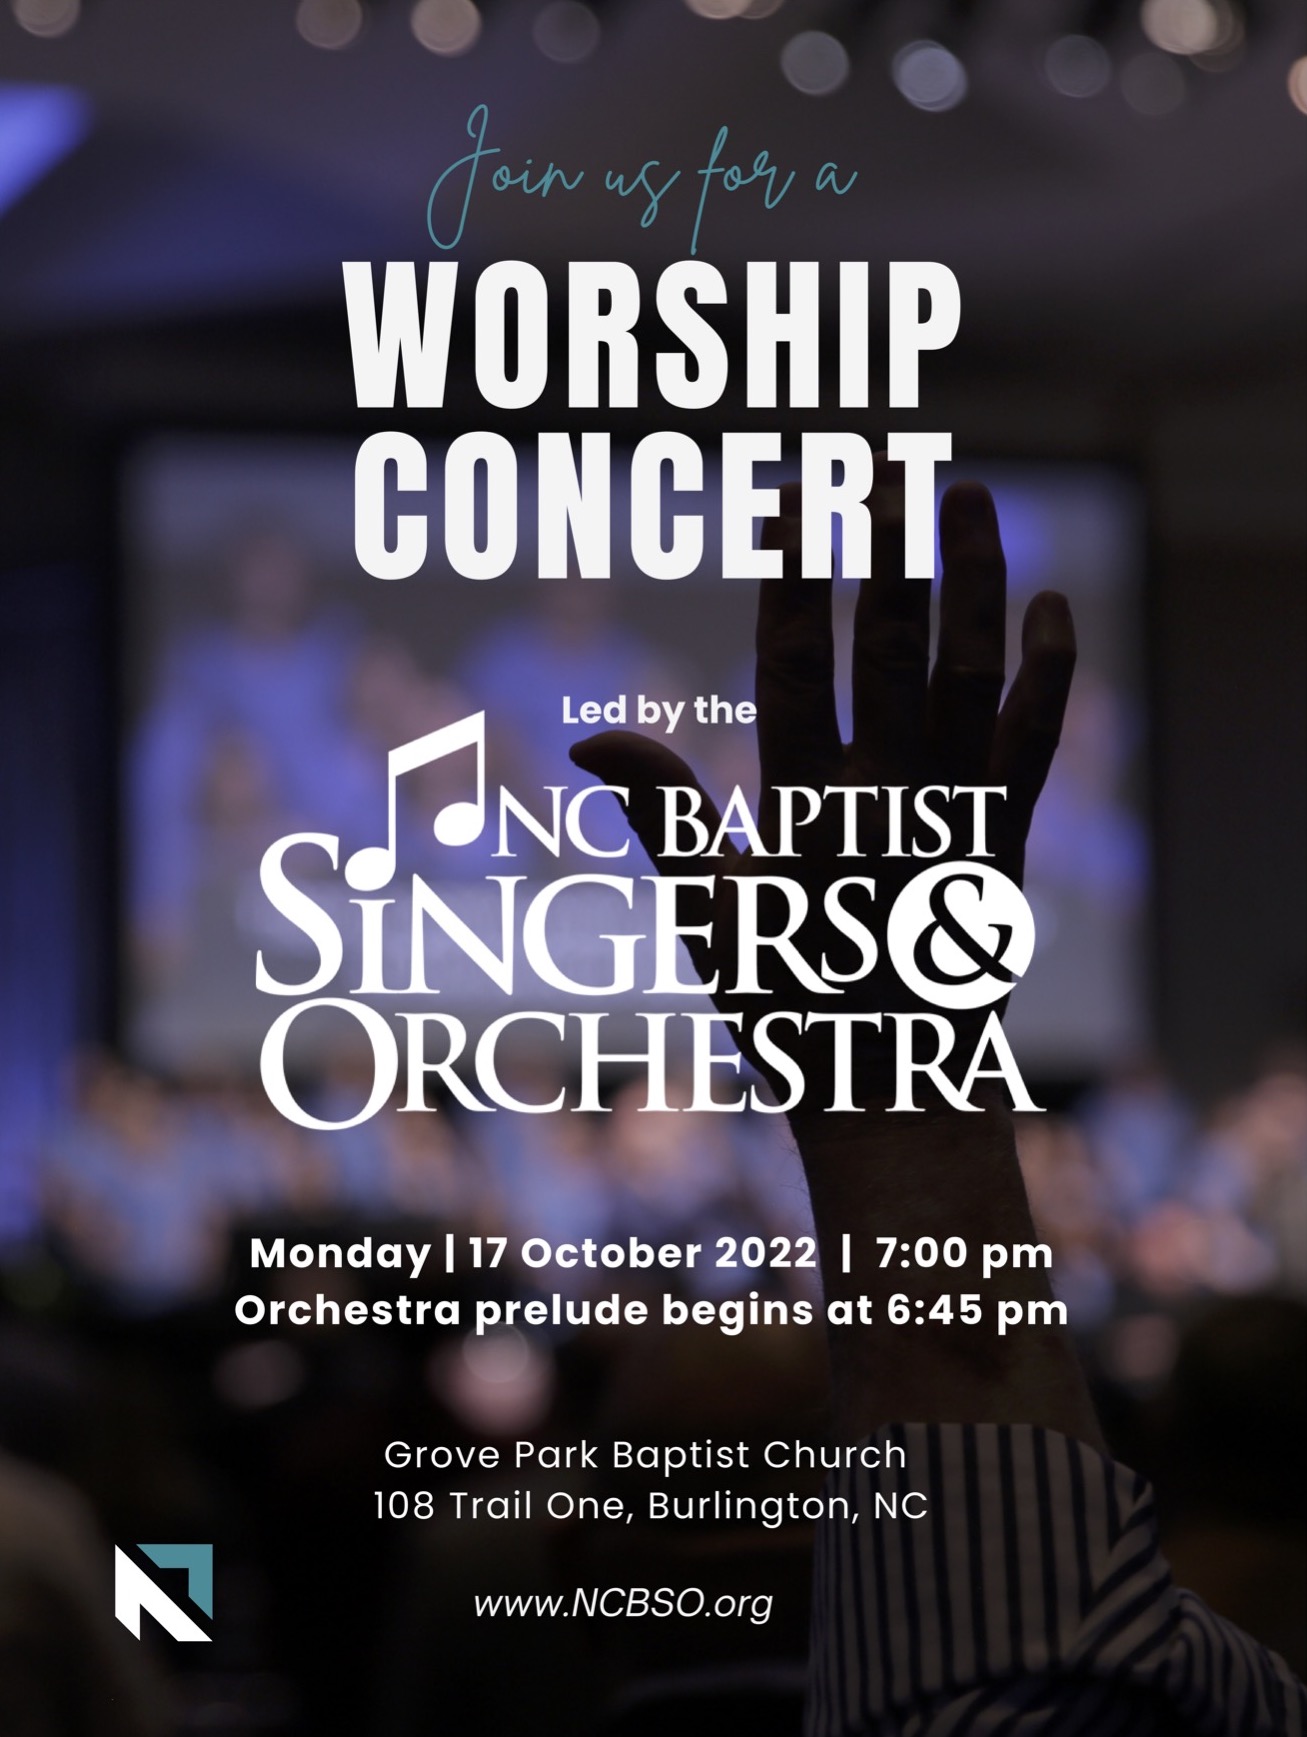 North Carolina Baptist Singers and Orchestra concert October 17